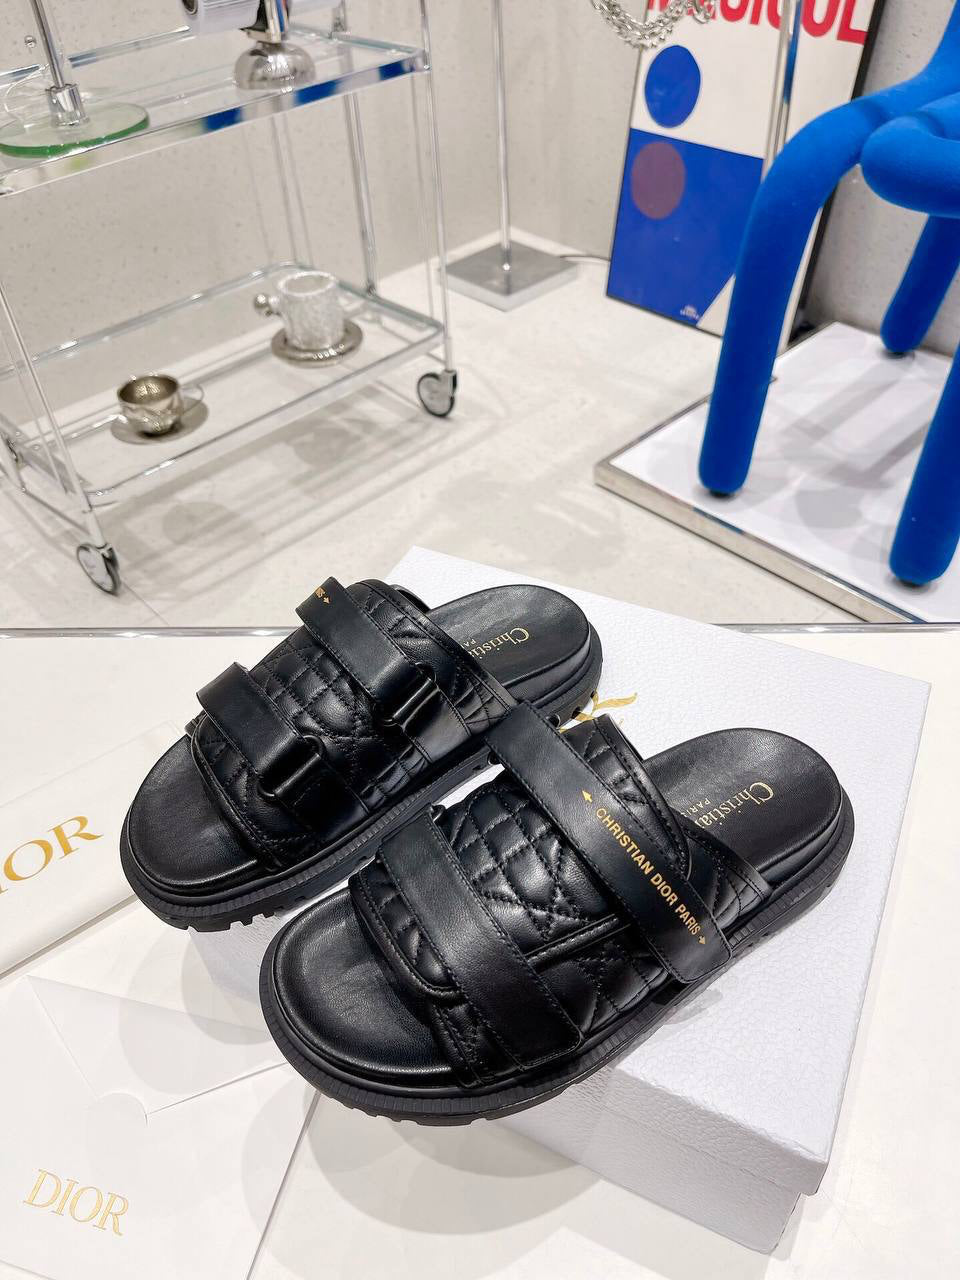 Dior Evolution Sandals